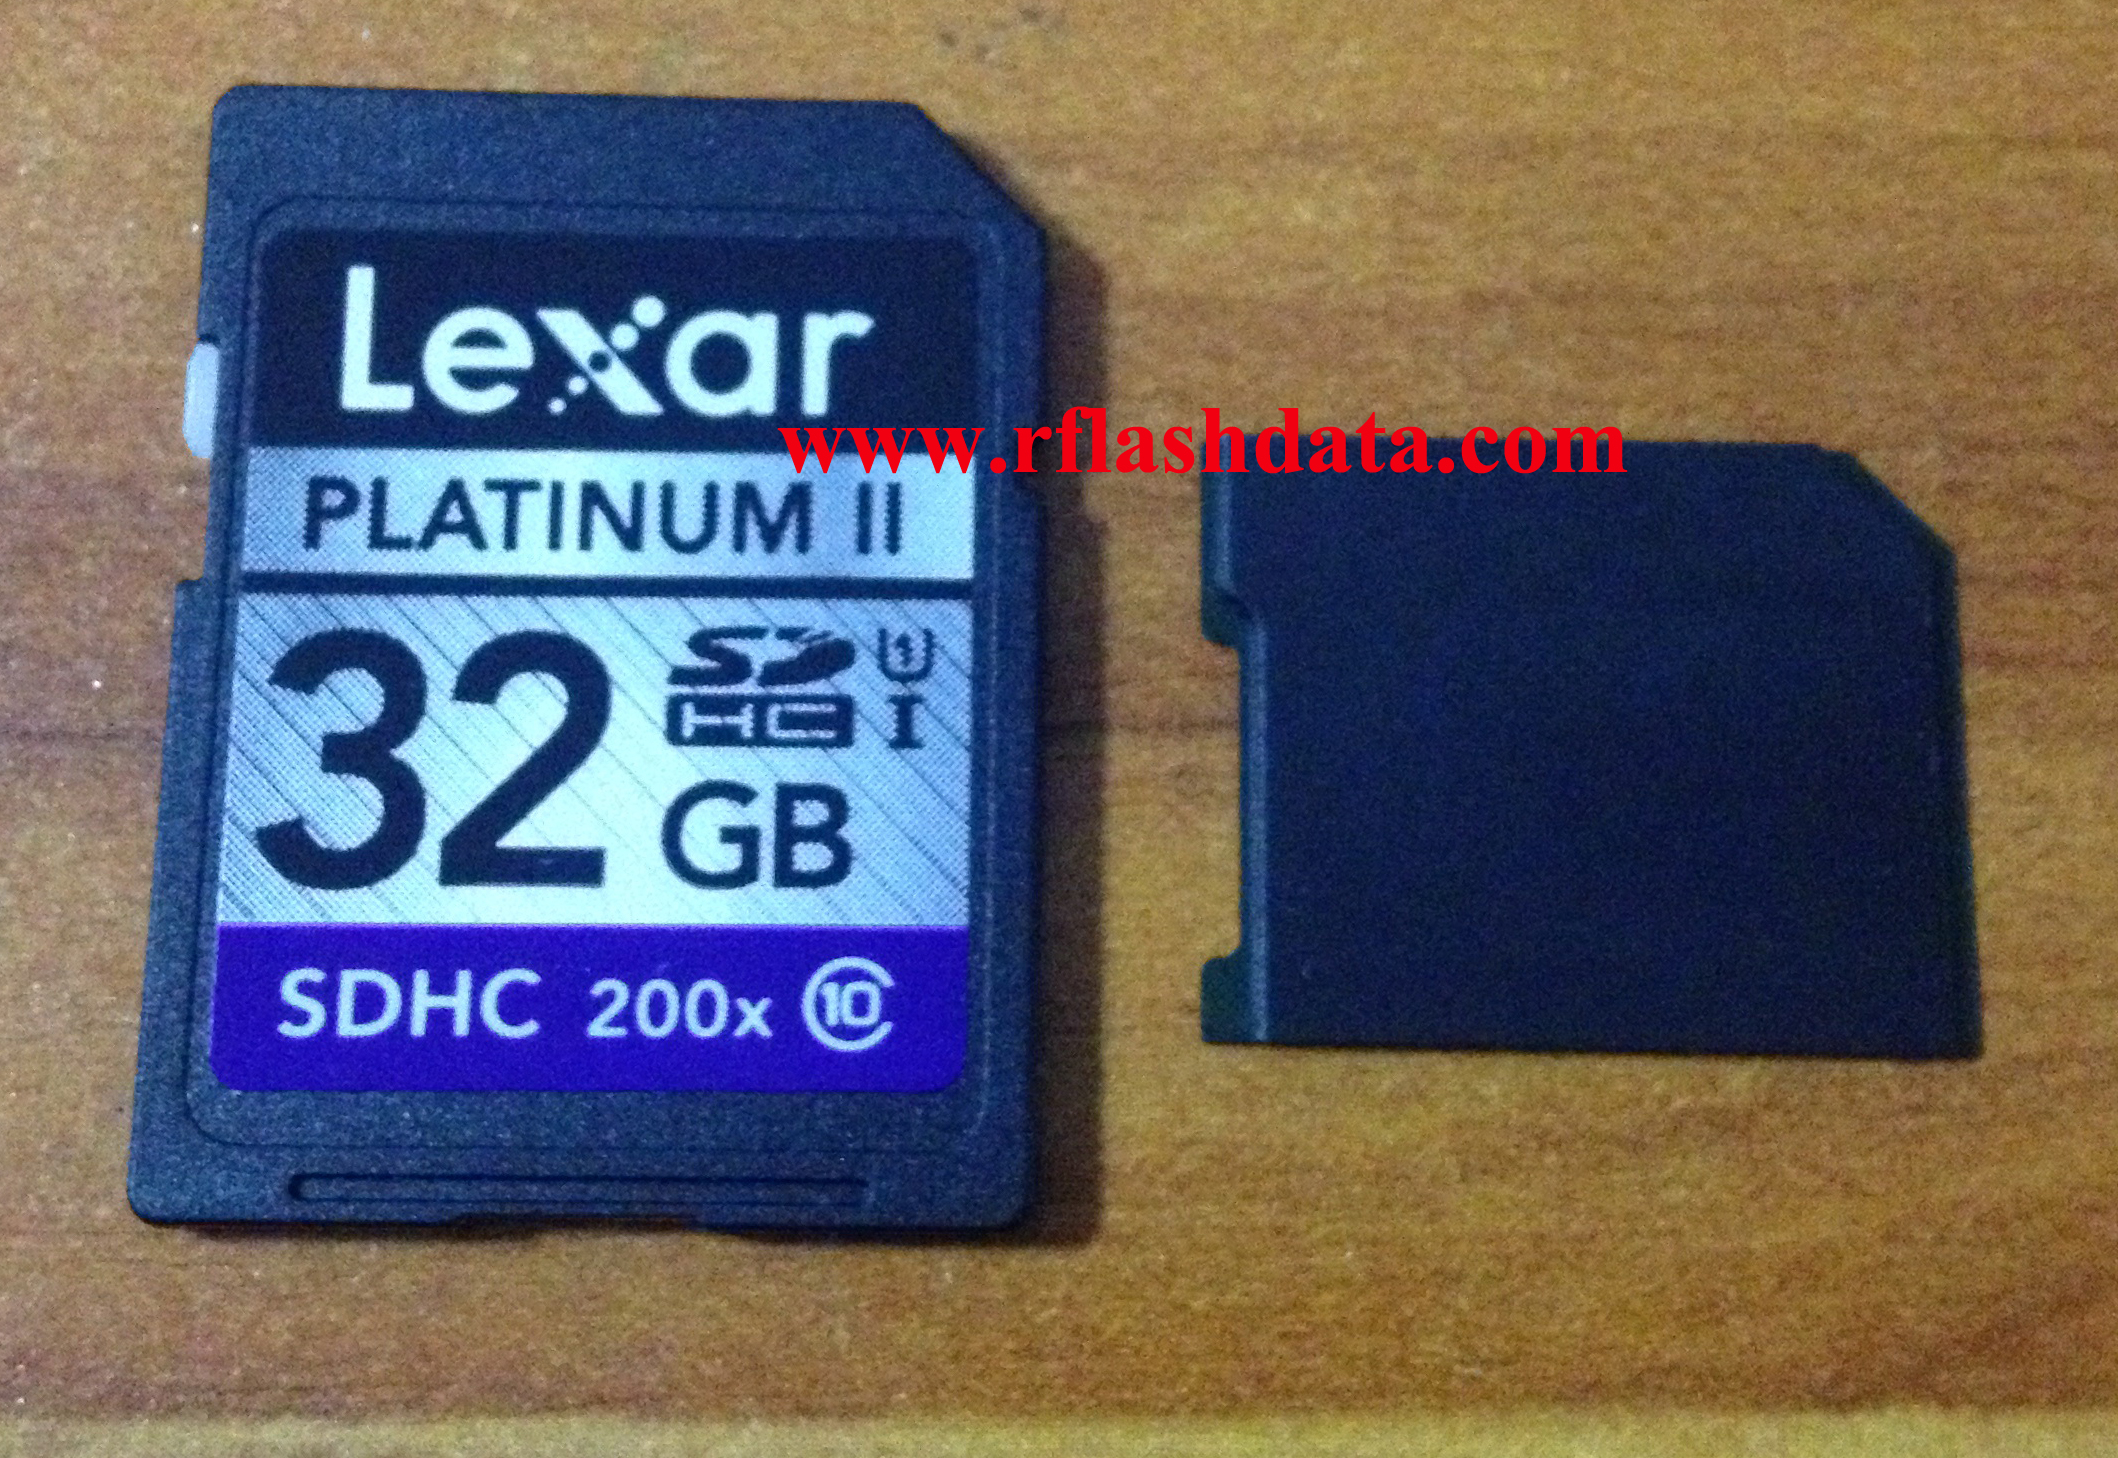 Lexar 32G Platinum II SDHC